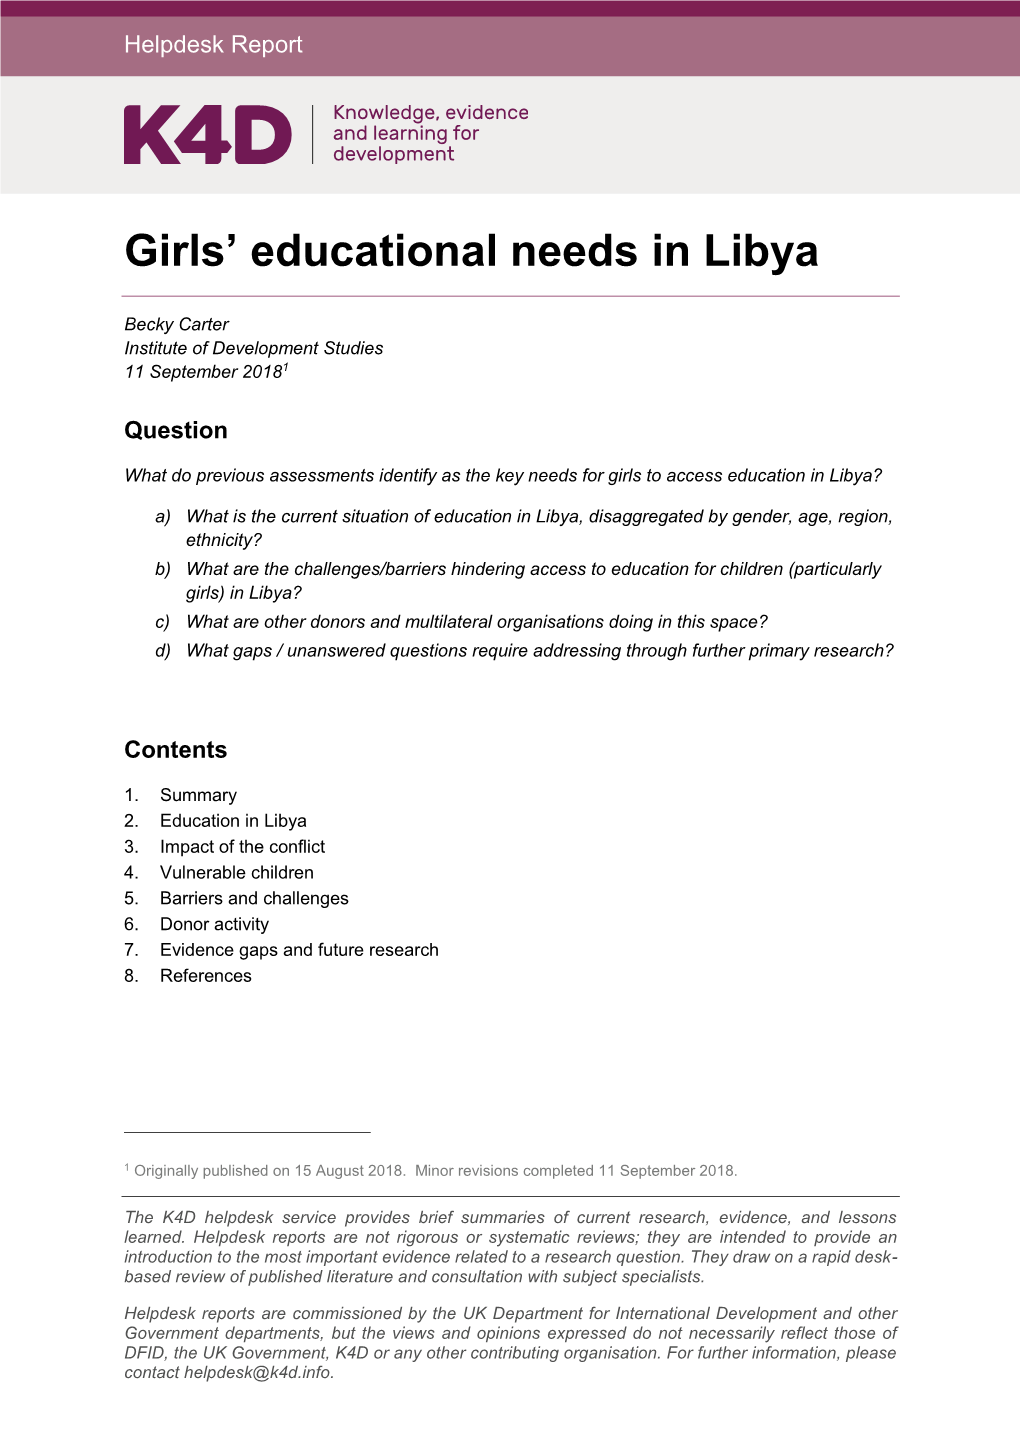 Girls' Educational Needs in Libya